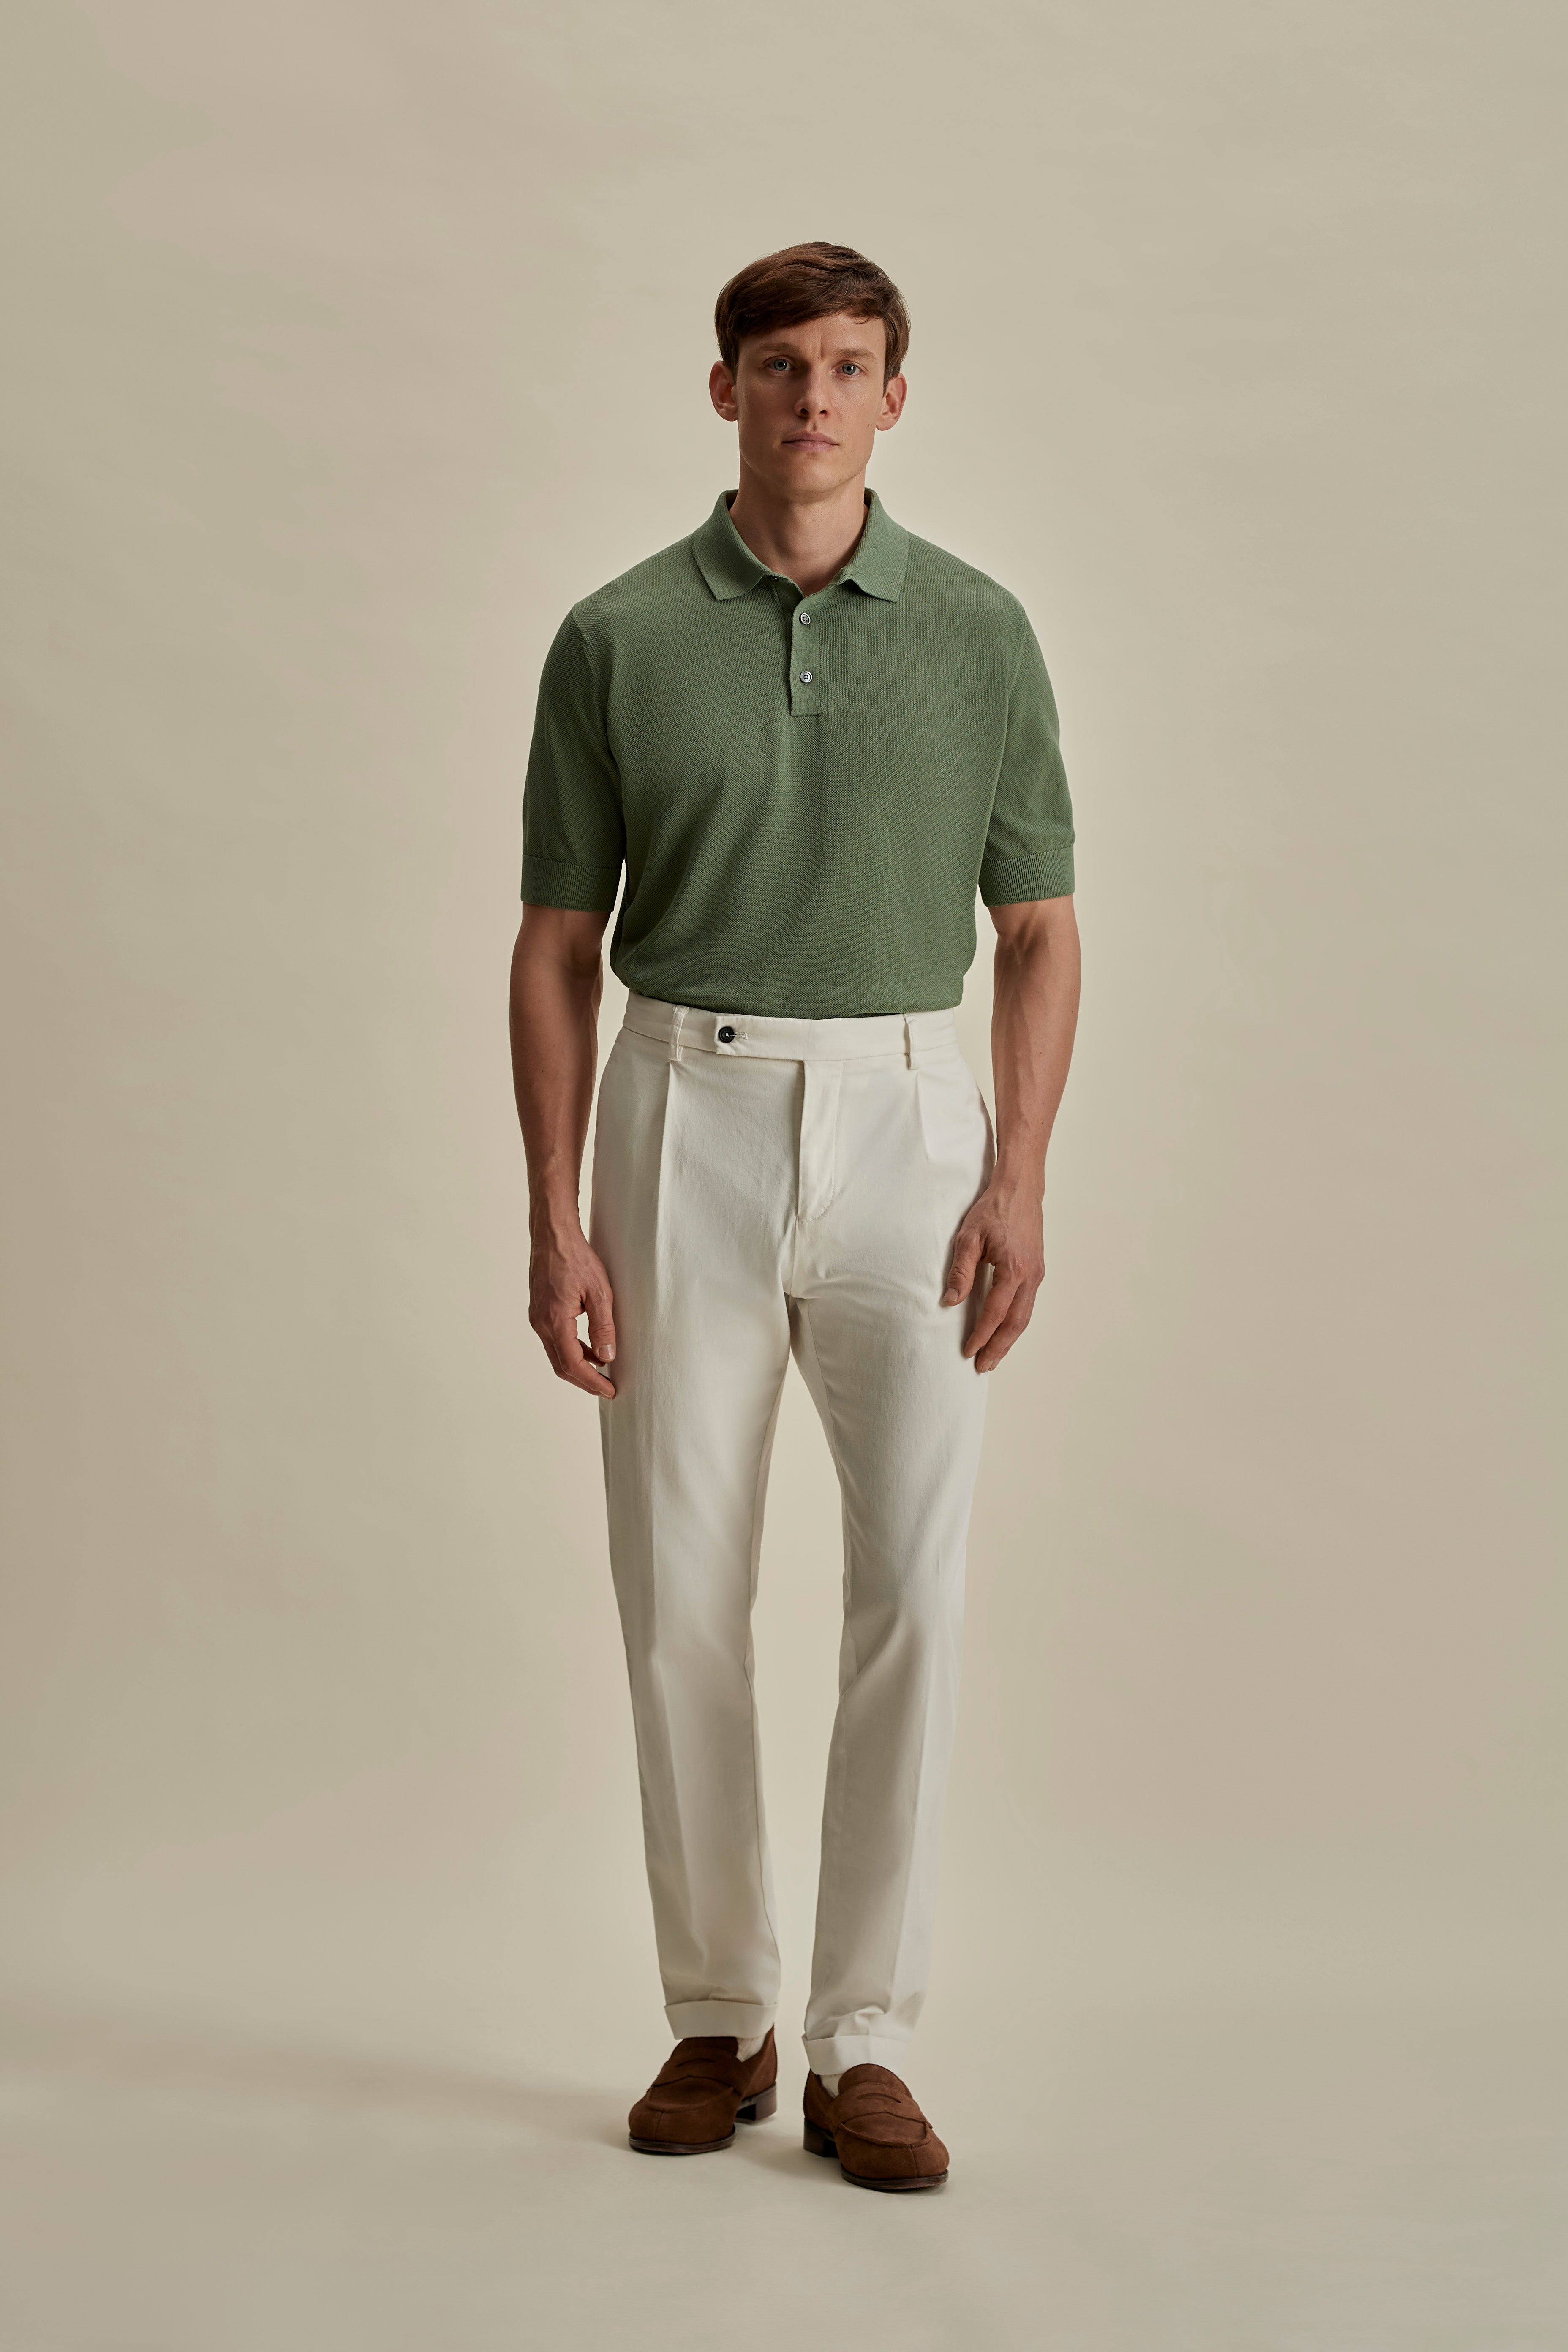 Cotton Single Pleat Chinos White Full Length Model Image